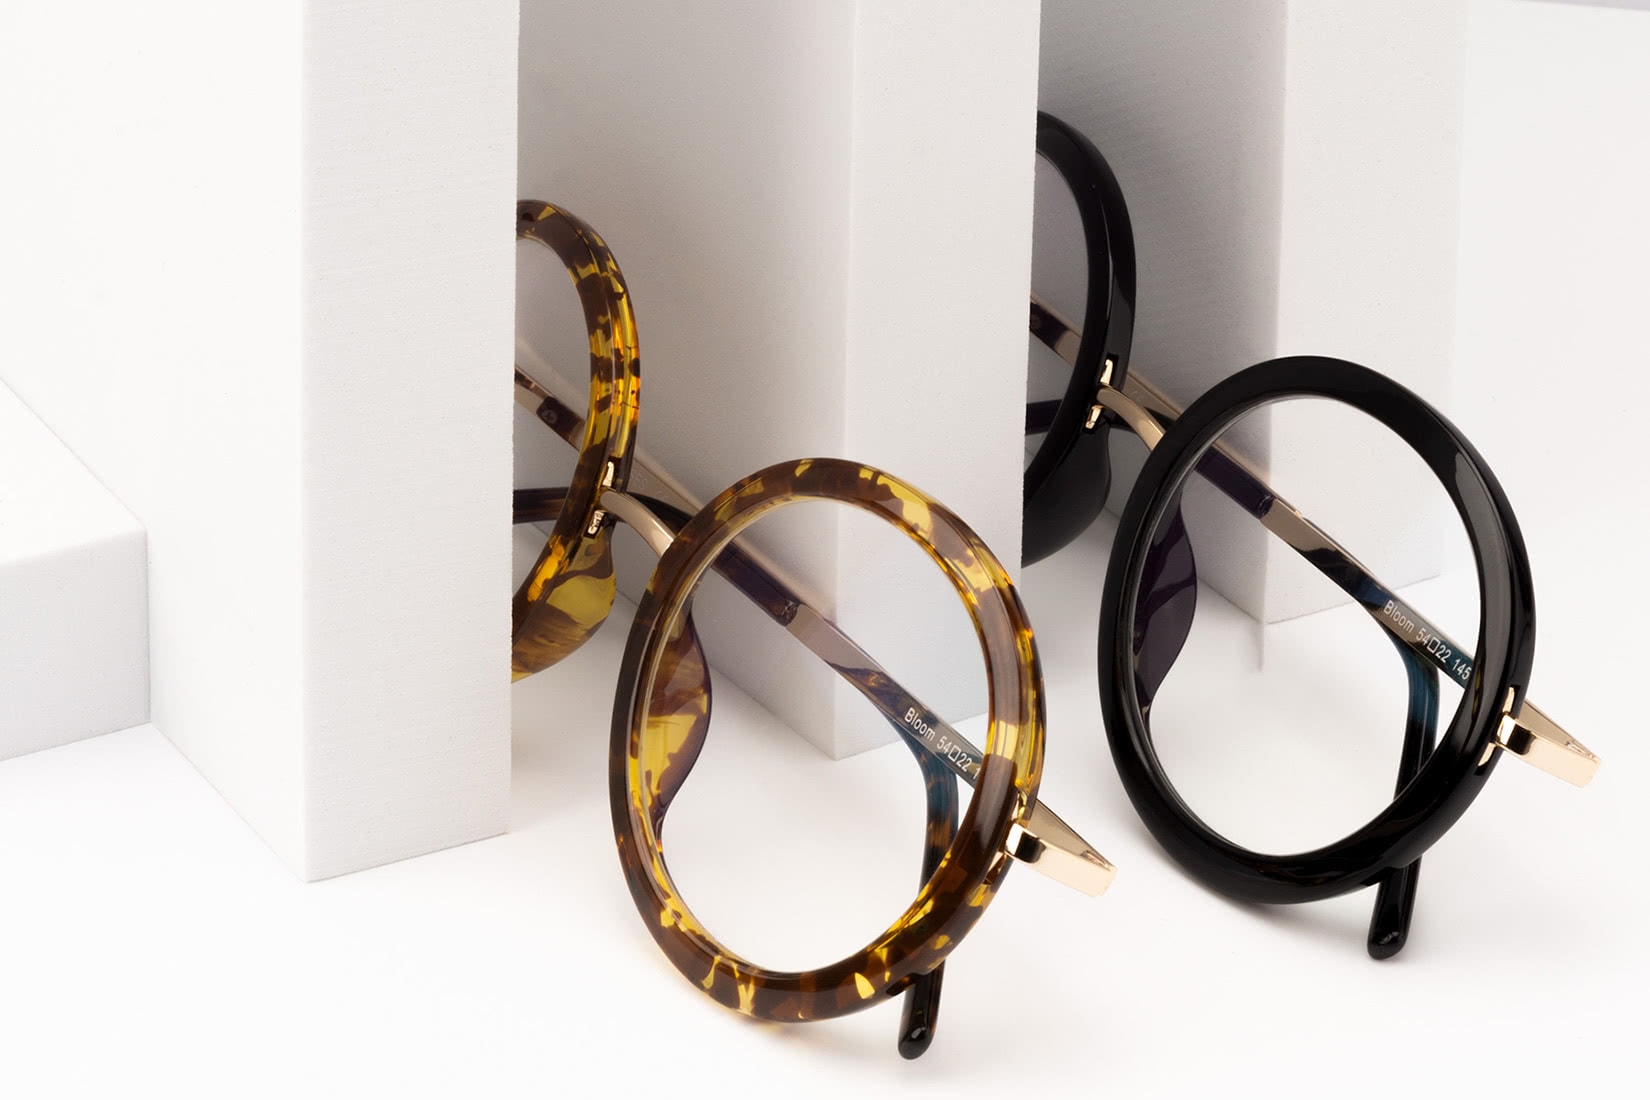 Yesglasses review women glasses - Luxe Digital